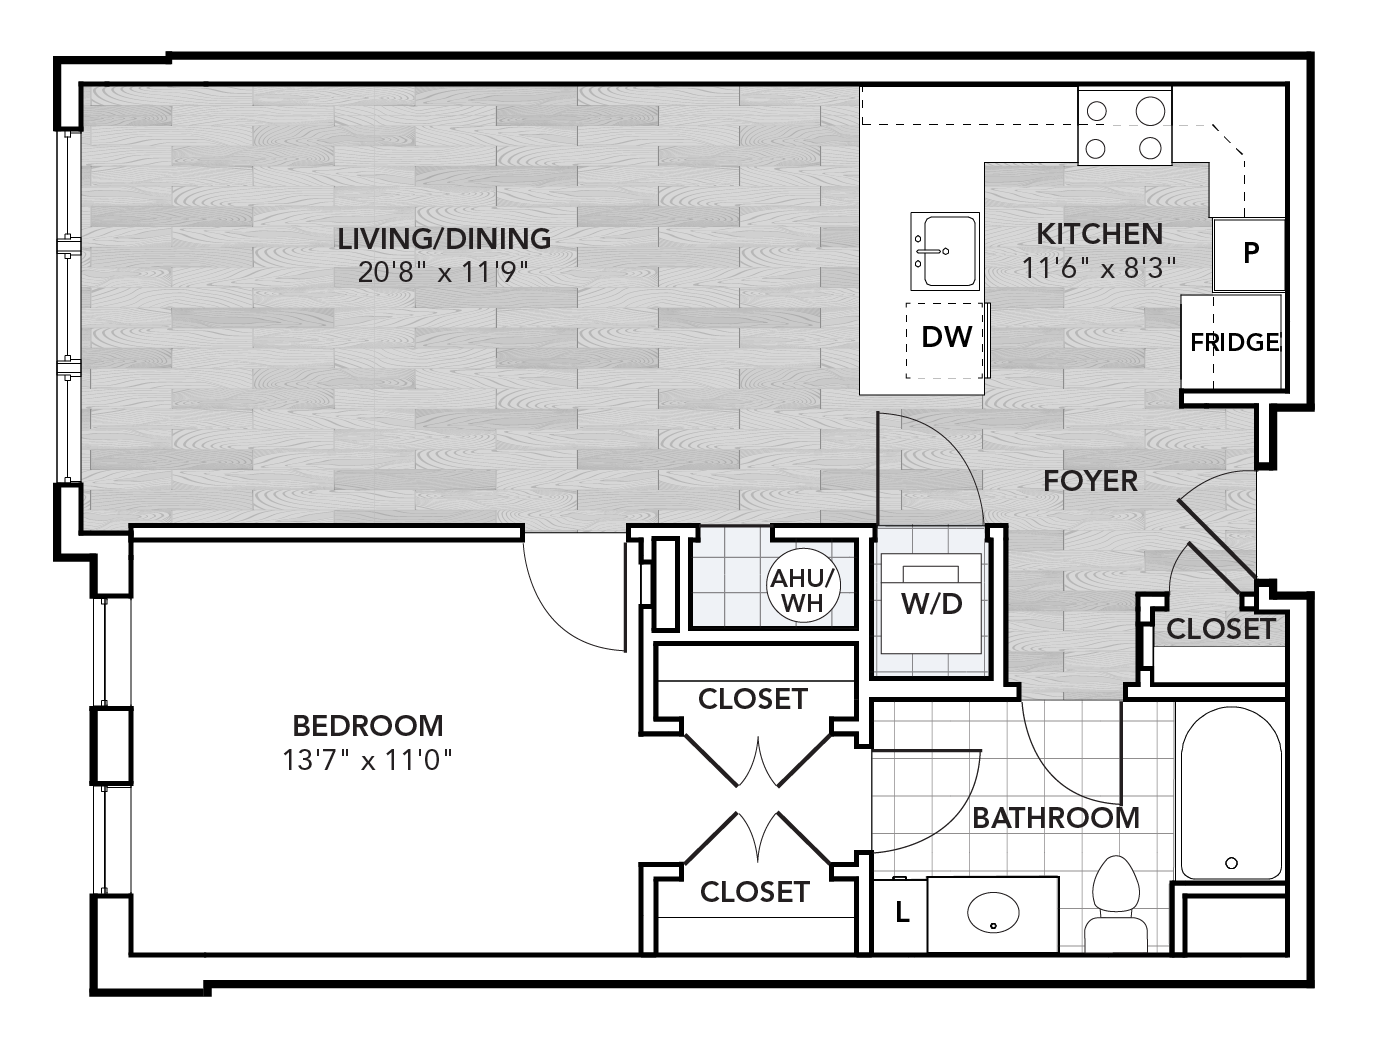 floor plan image unit id 129